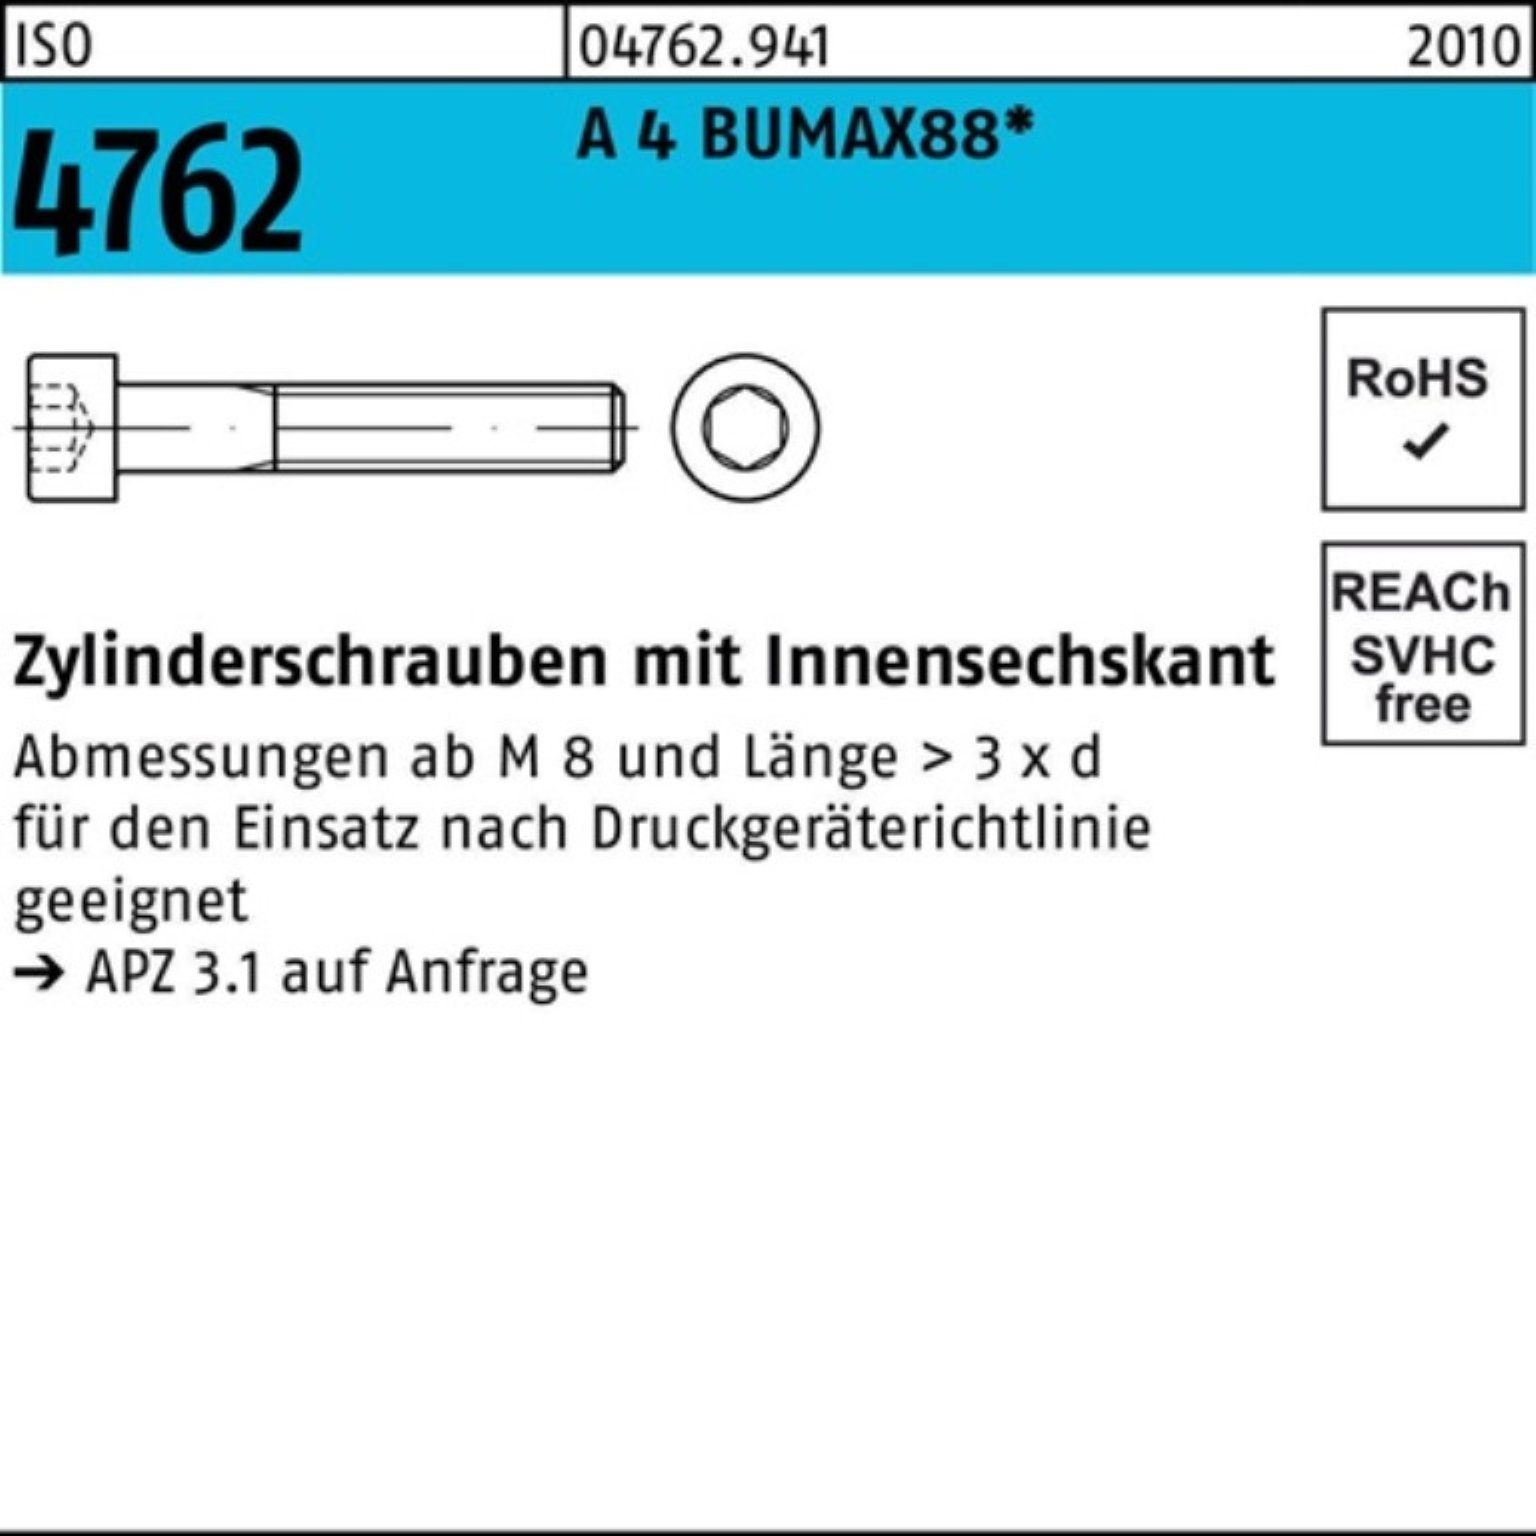 Bufab Zylinderschraube 100er Pack Zylinderschraube ISO 4762 Innen-6kt M6x 70 A 4 BUMAX88 100